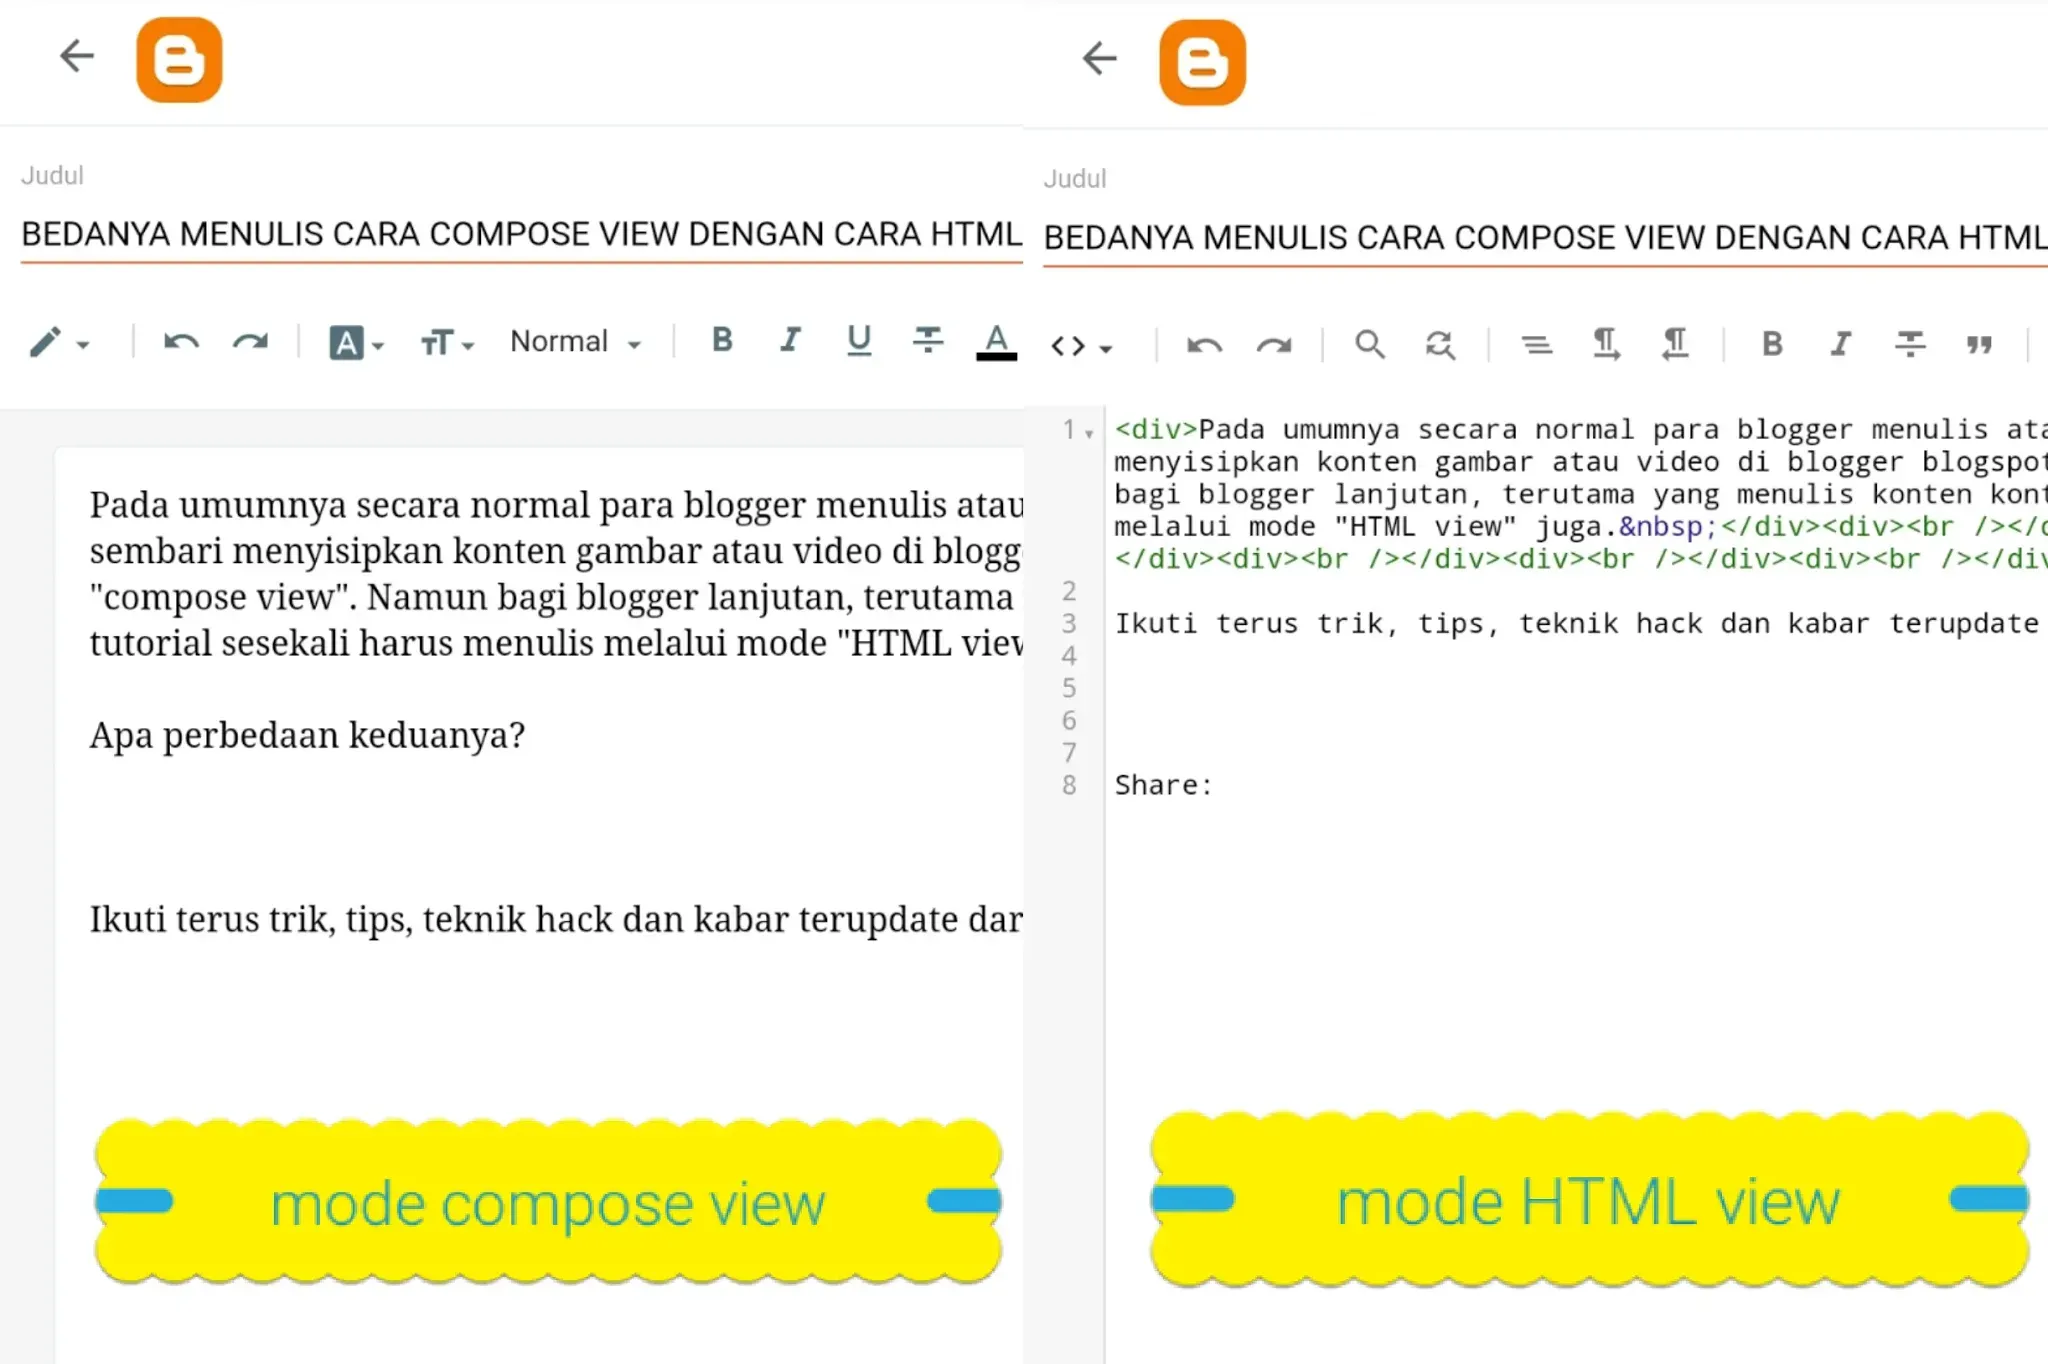 compose view vs HTML view